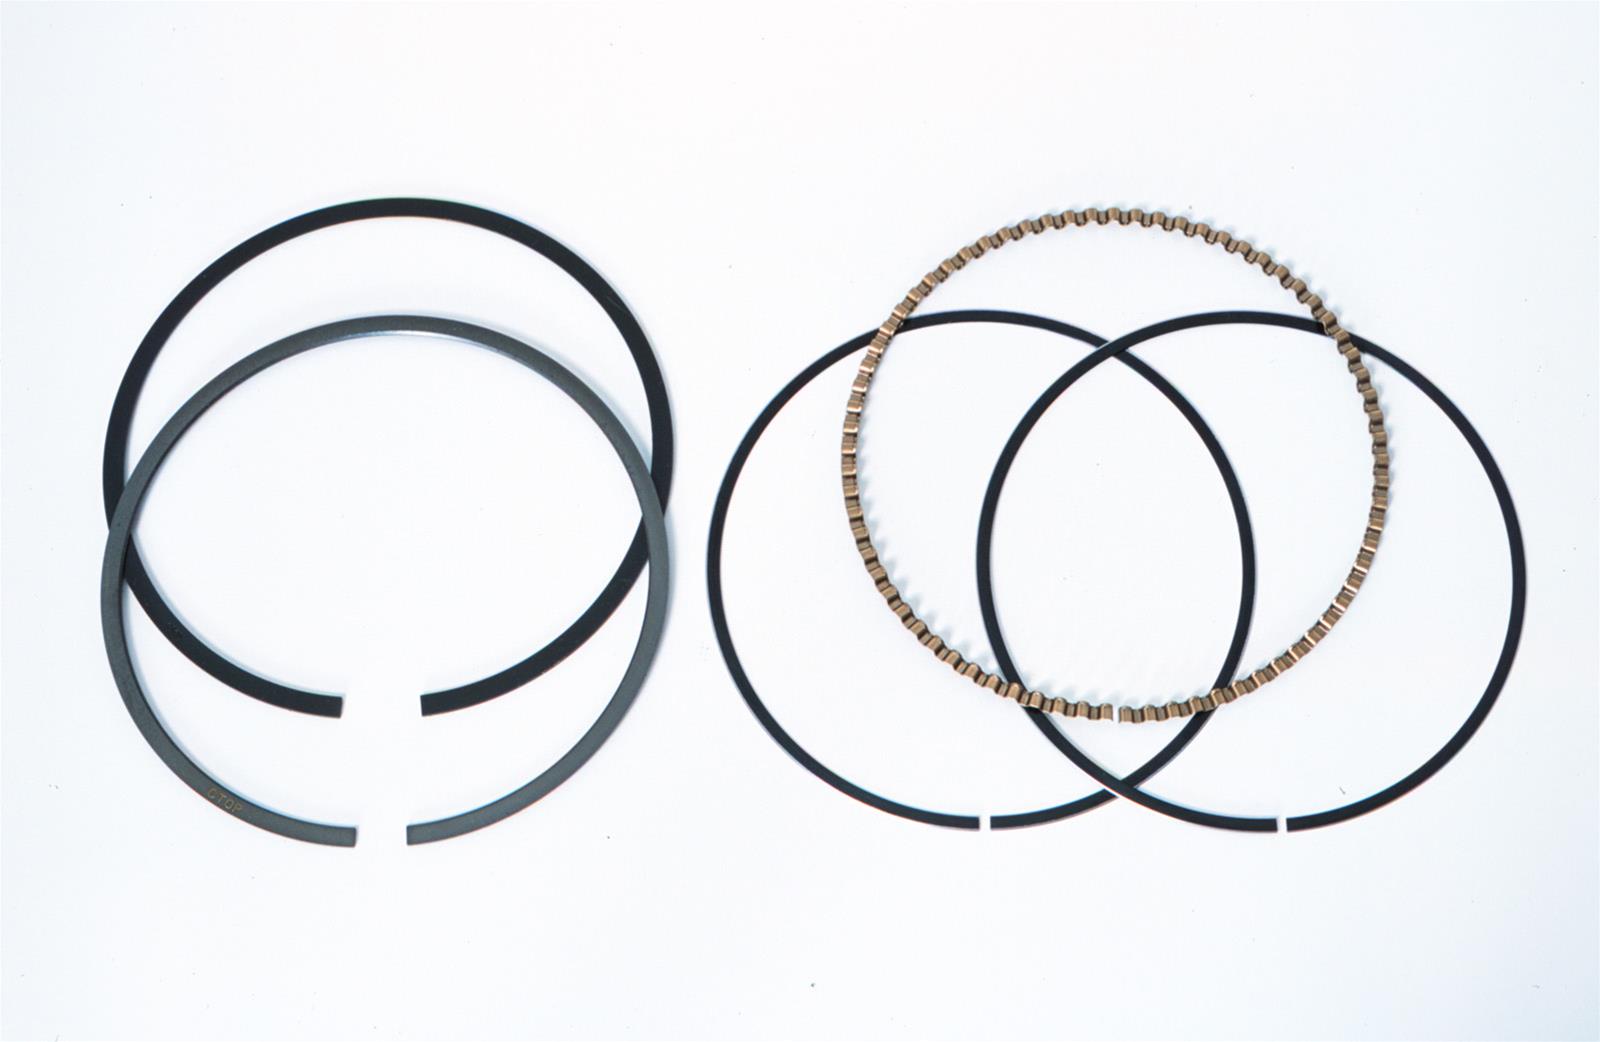 Mahle Performance Piston Ring Set 4170MS-15 1.5 1.5 3.0mm 4.165 Bore File Fit 